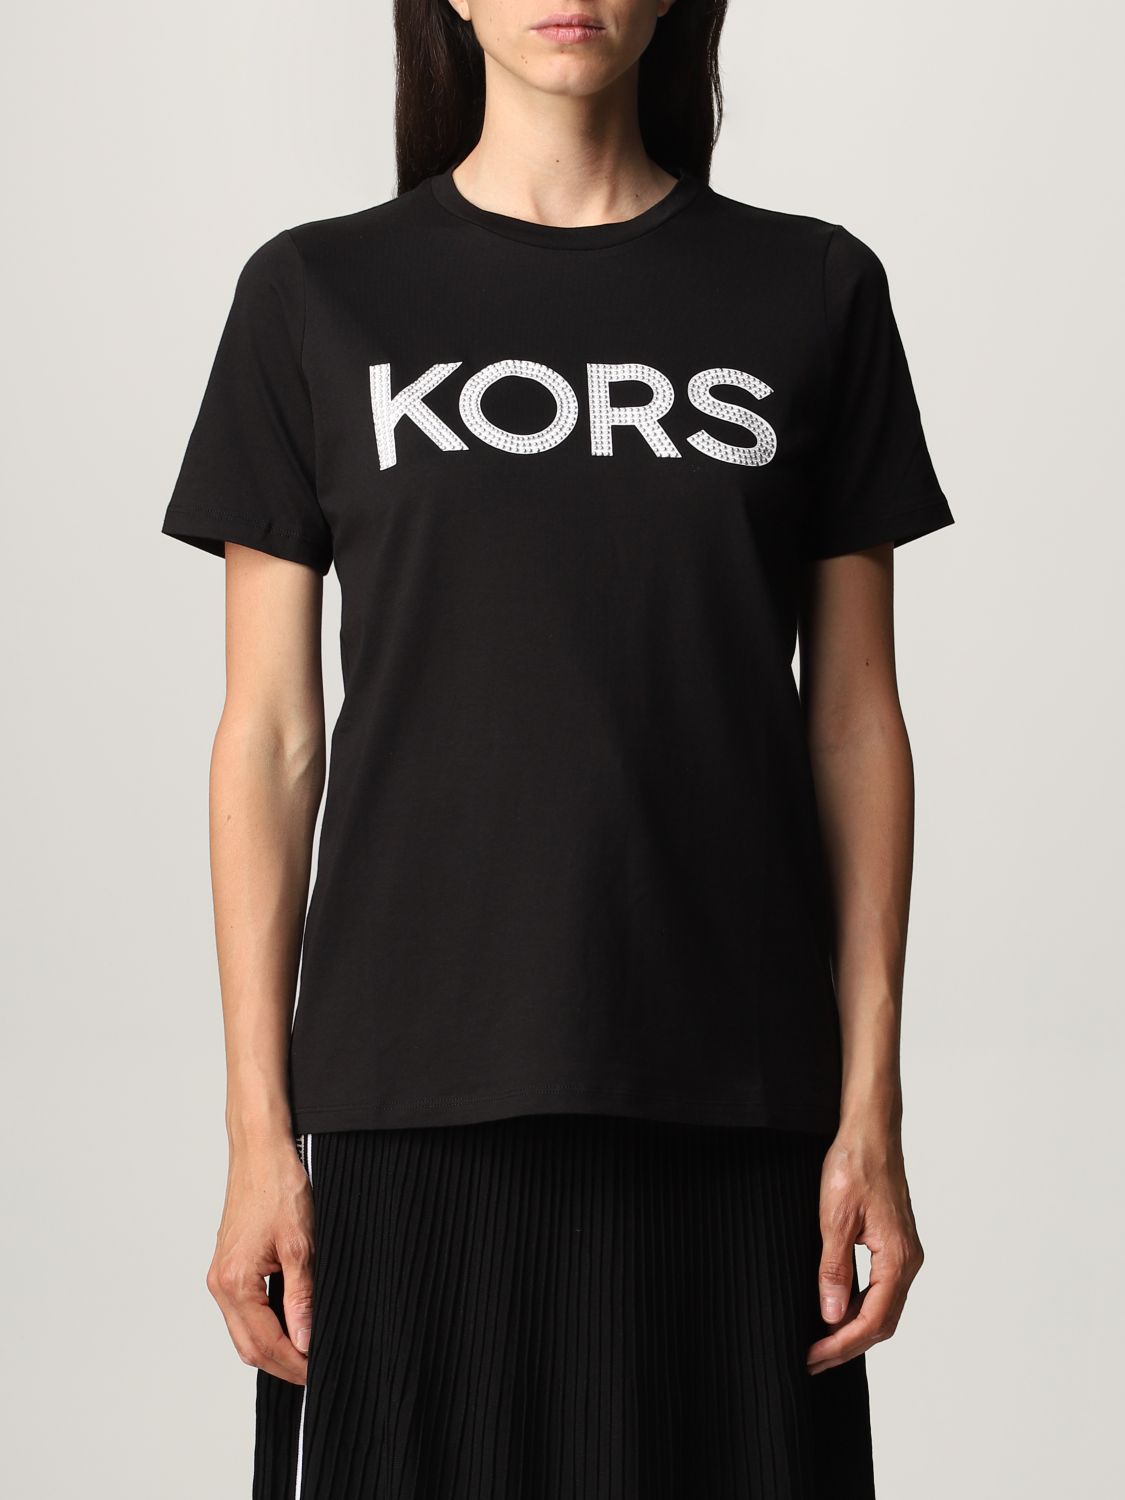 MICHAEL KORS: Michael T-shirt with stud logo - Black | Michael Kors t ...